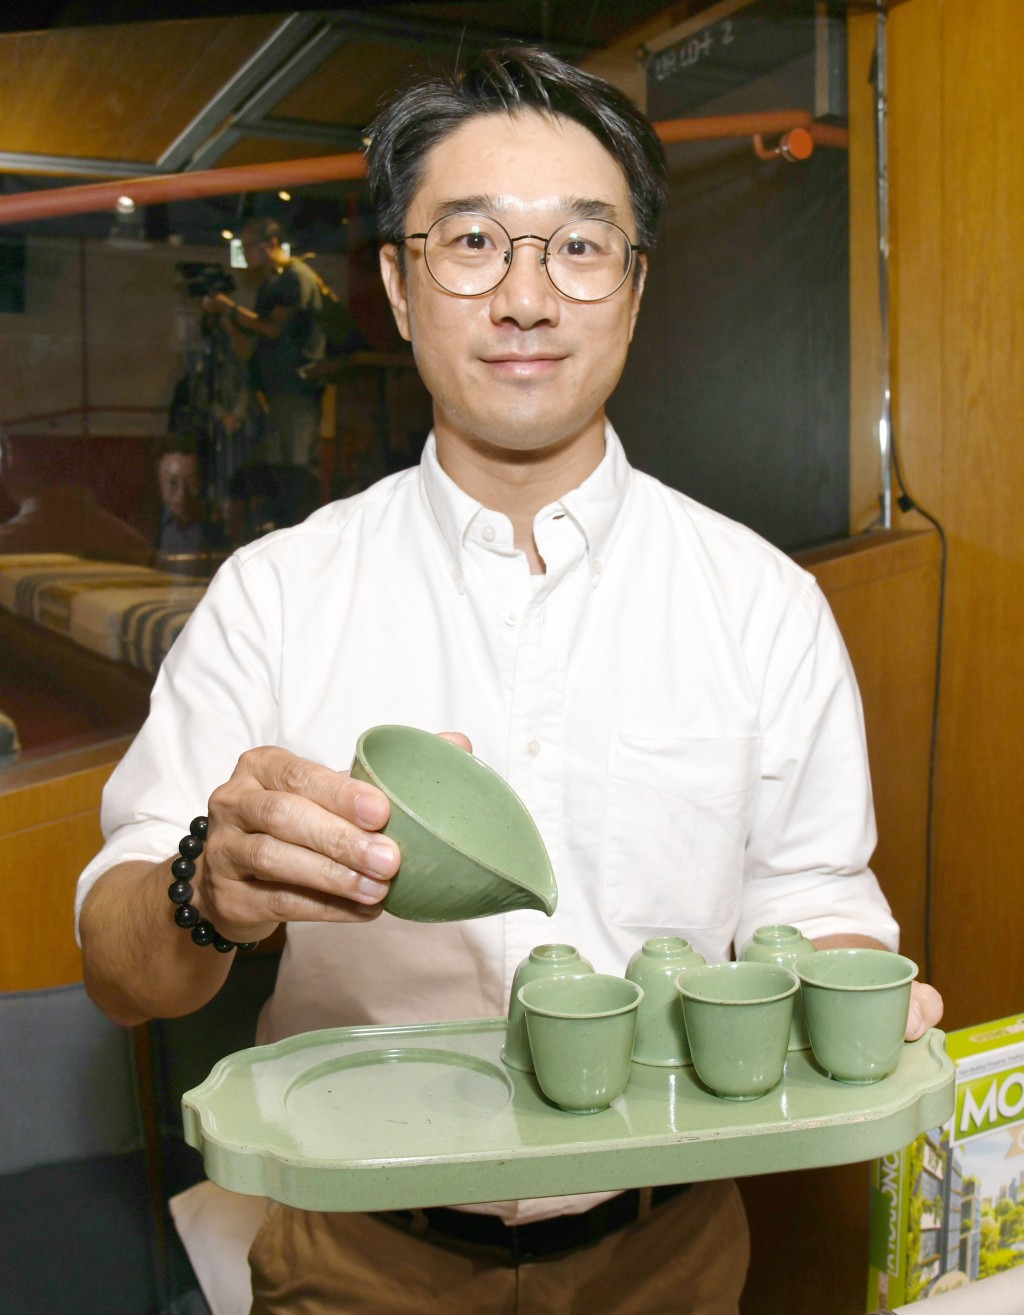 Homelover Products Limited负责人Jimmy手持的茶杯是利用天然稻谷和茶叶杆处理制成。